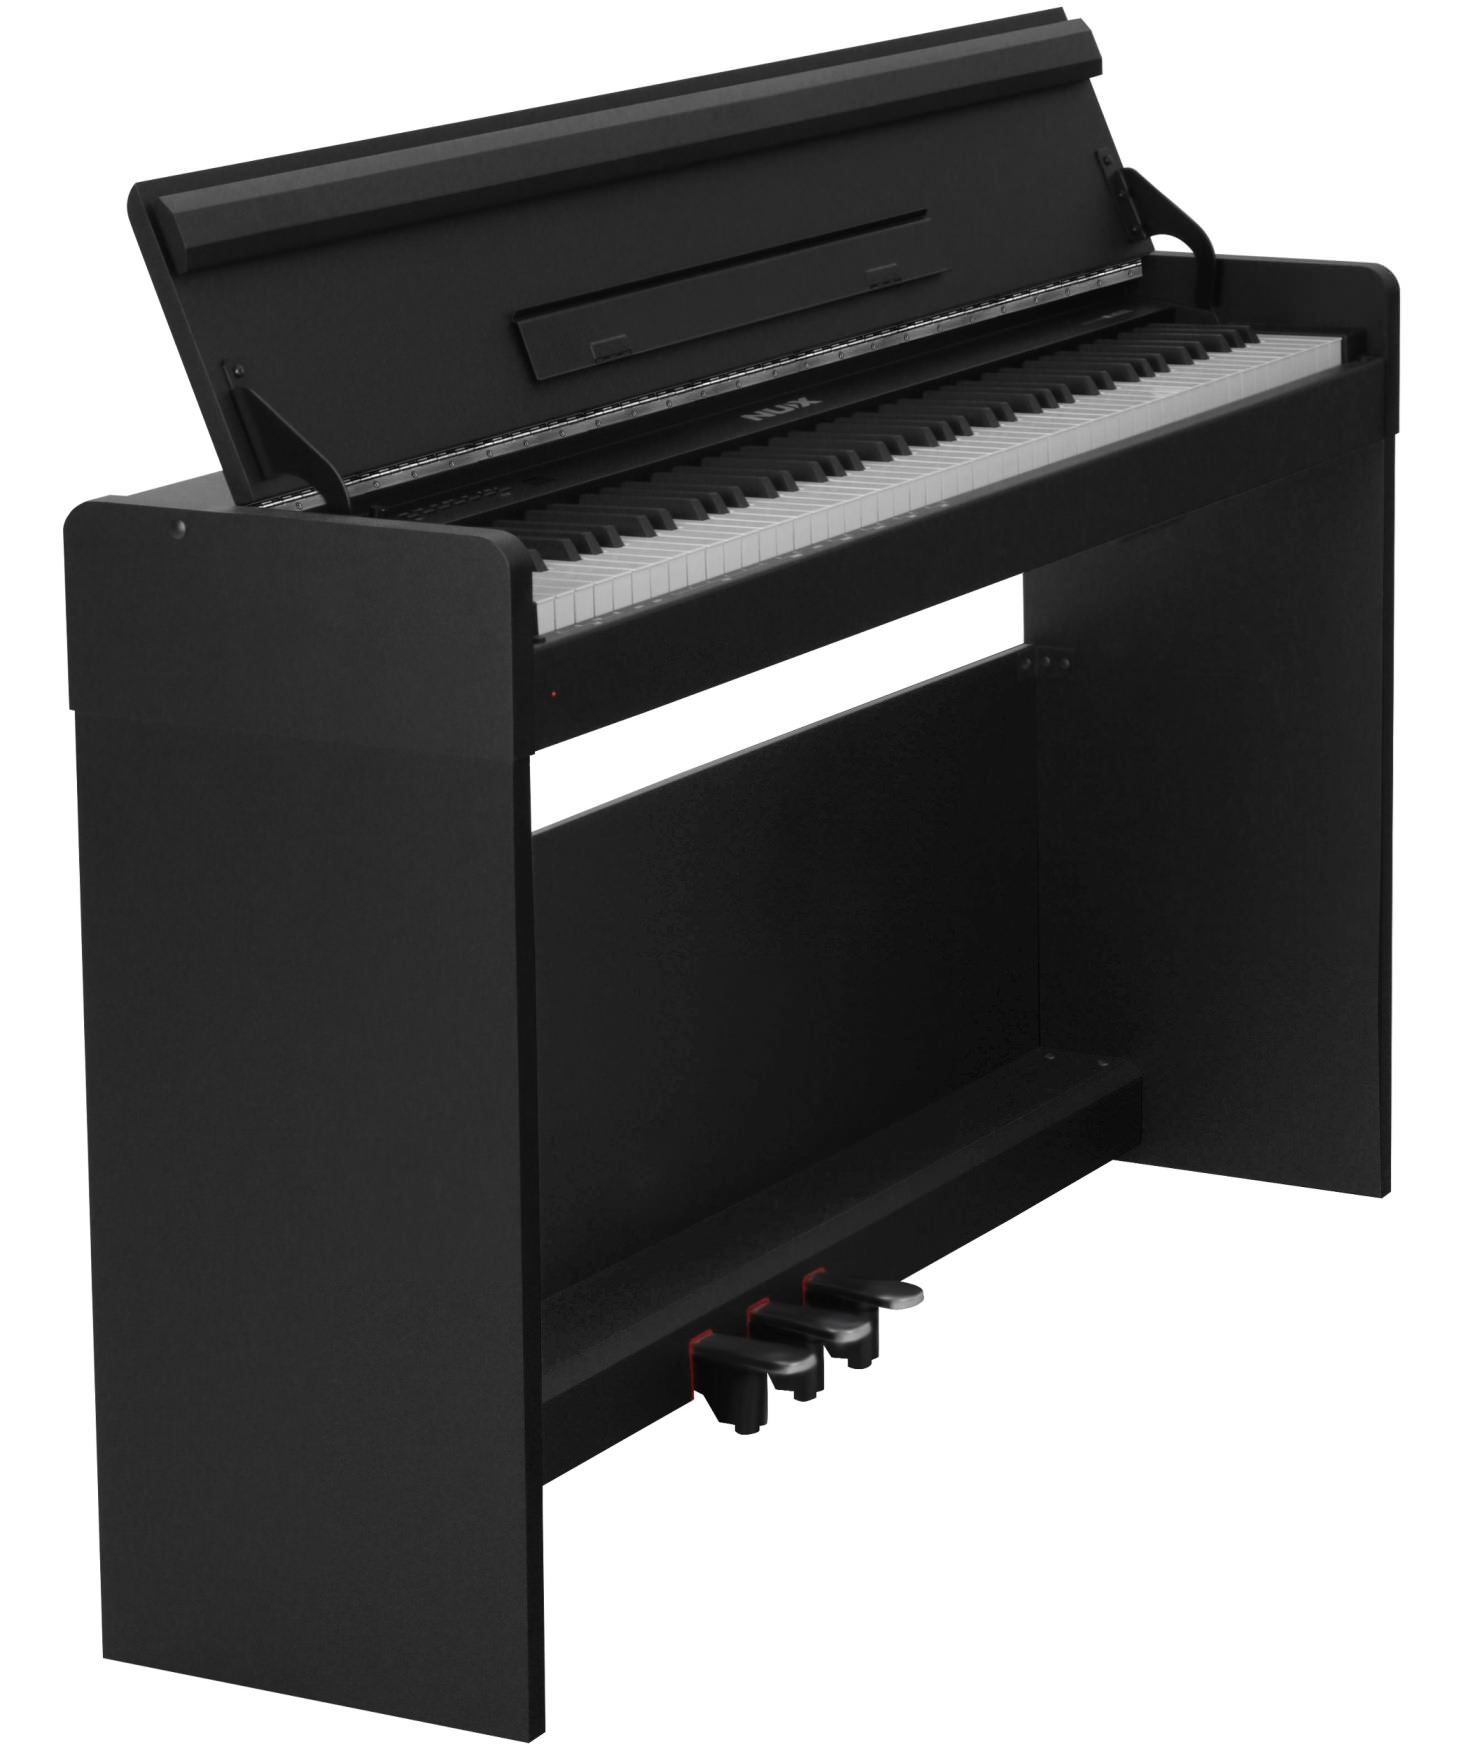 NUX WK-310-Black цифровое пианино на стойке с педалями, чёрное